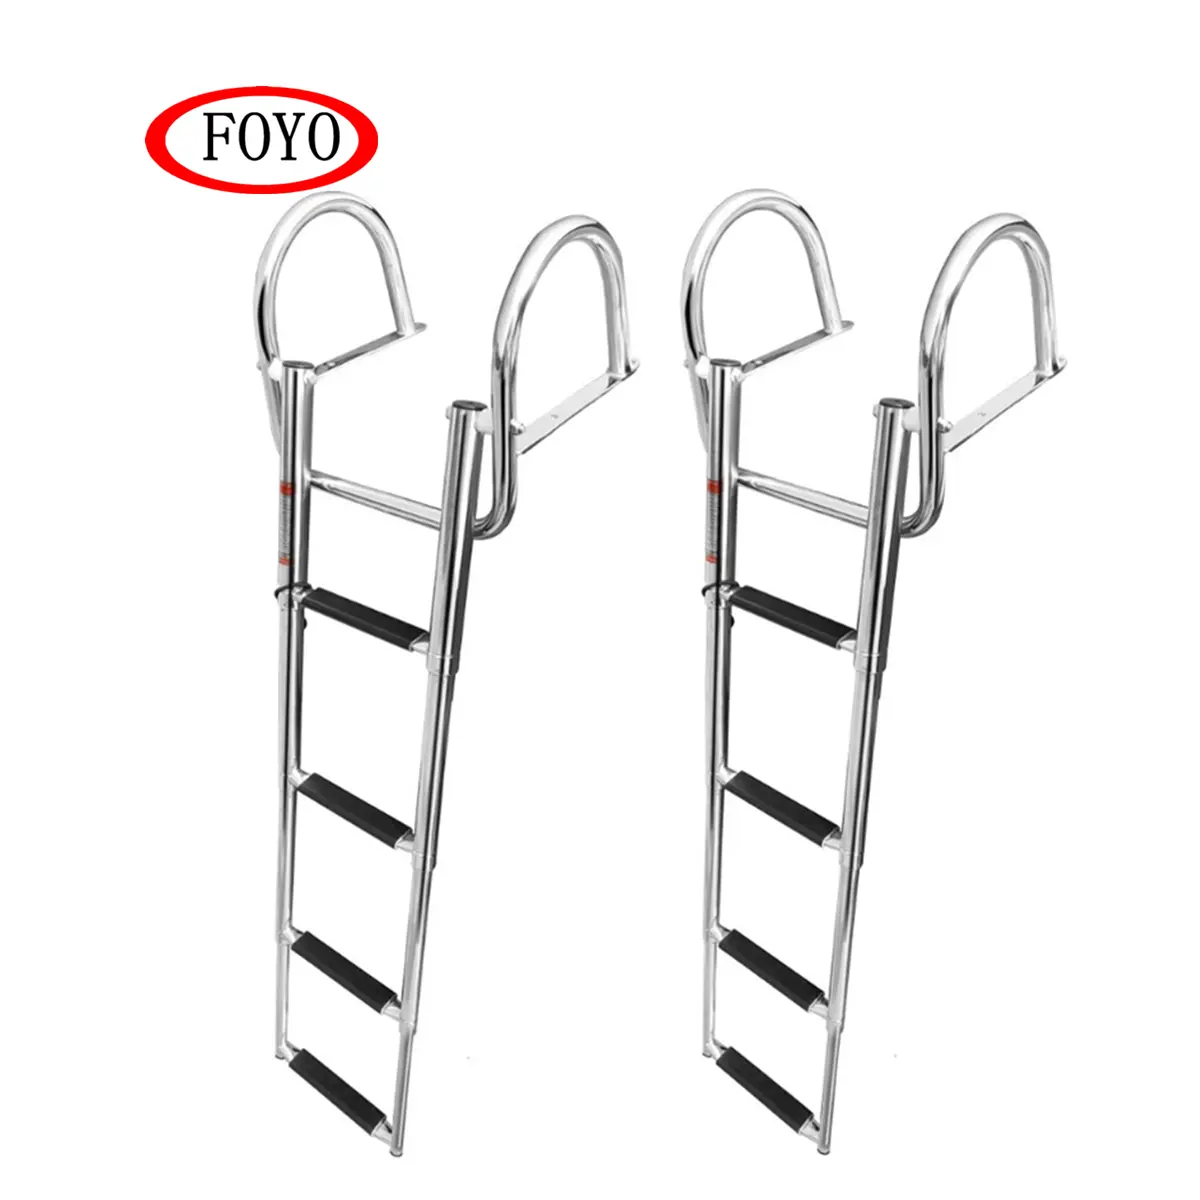 FOYO boating supplies marine accessories 4 Step Stainless Steel Pontoon Boat Ladder